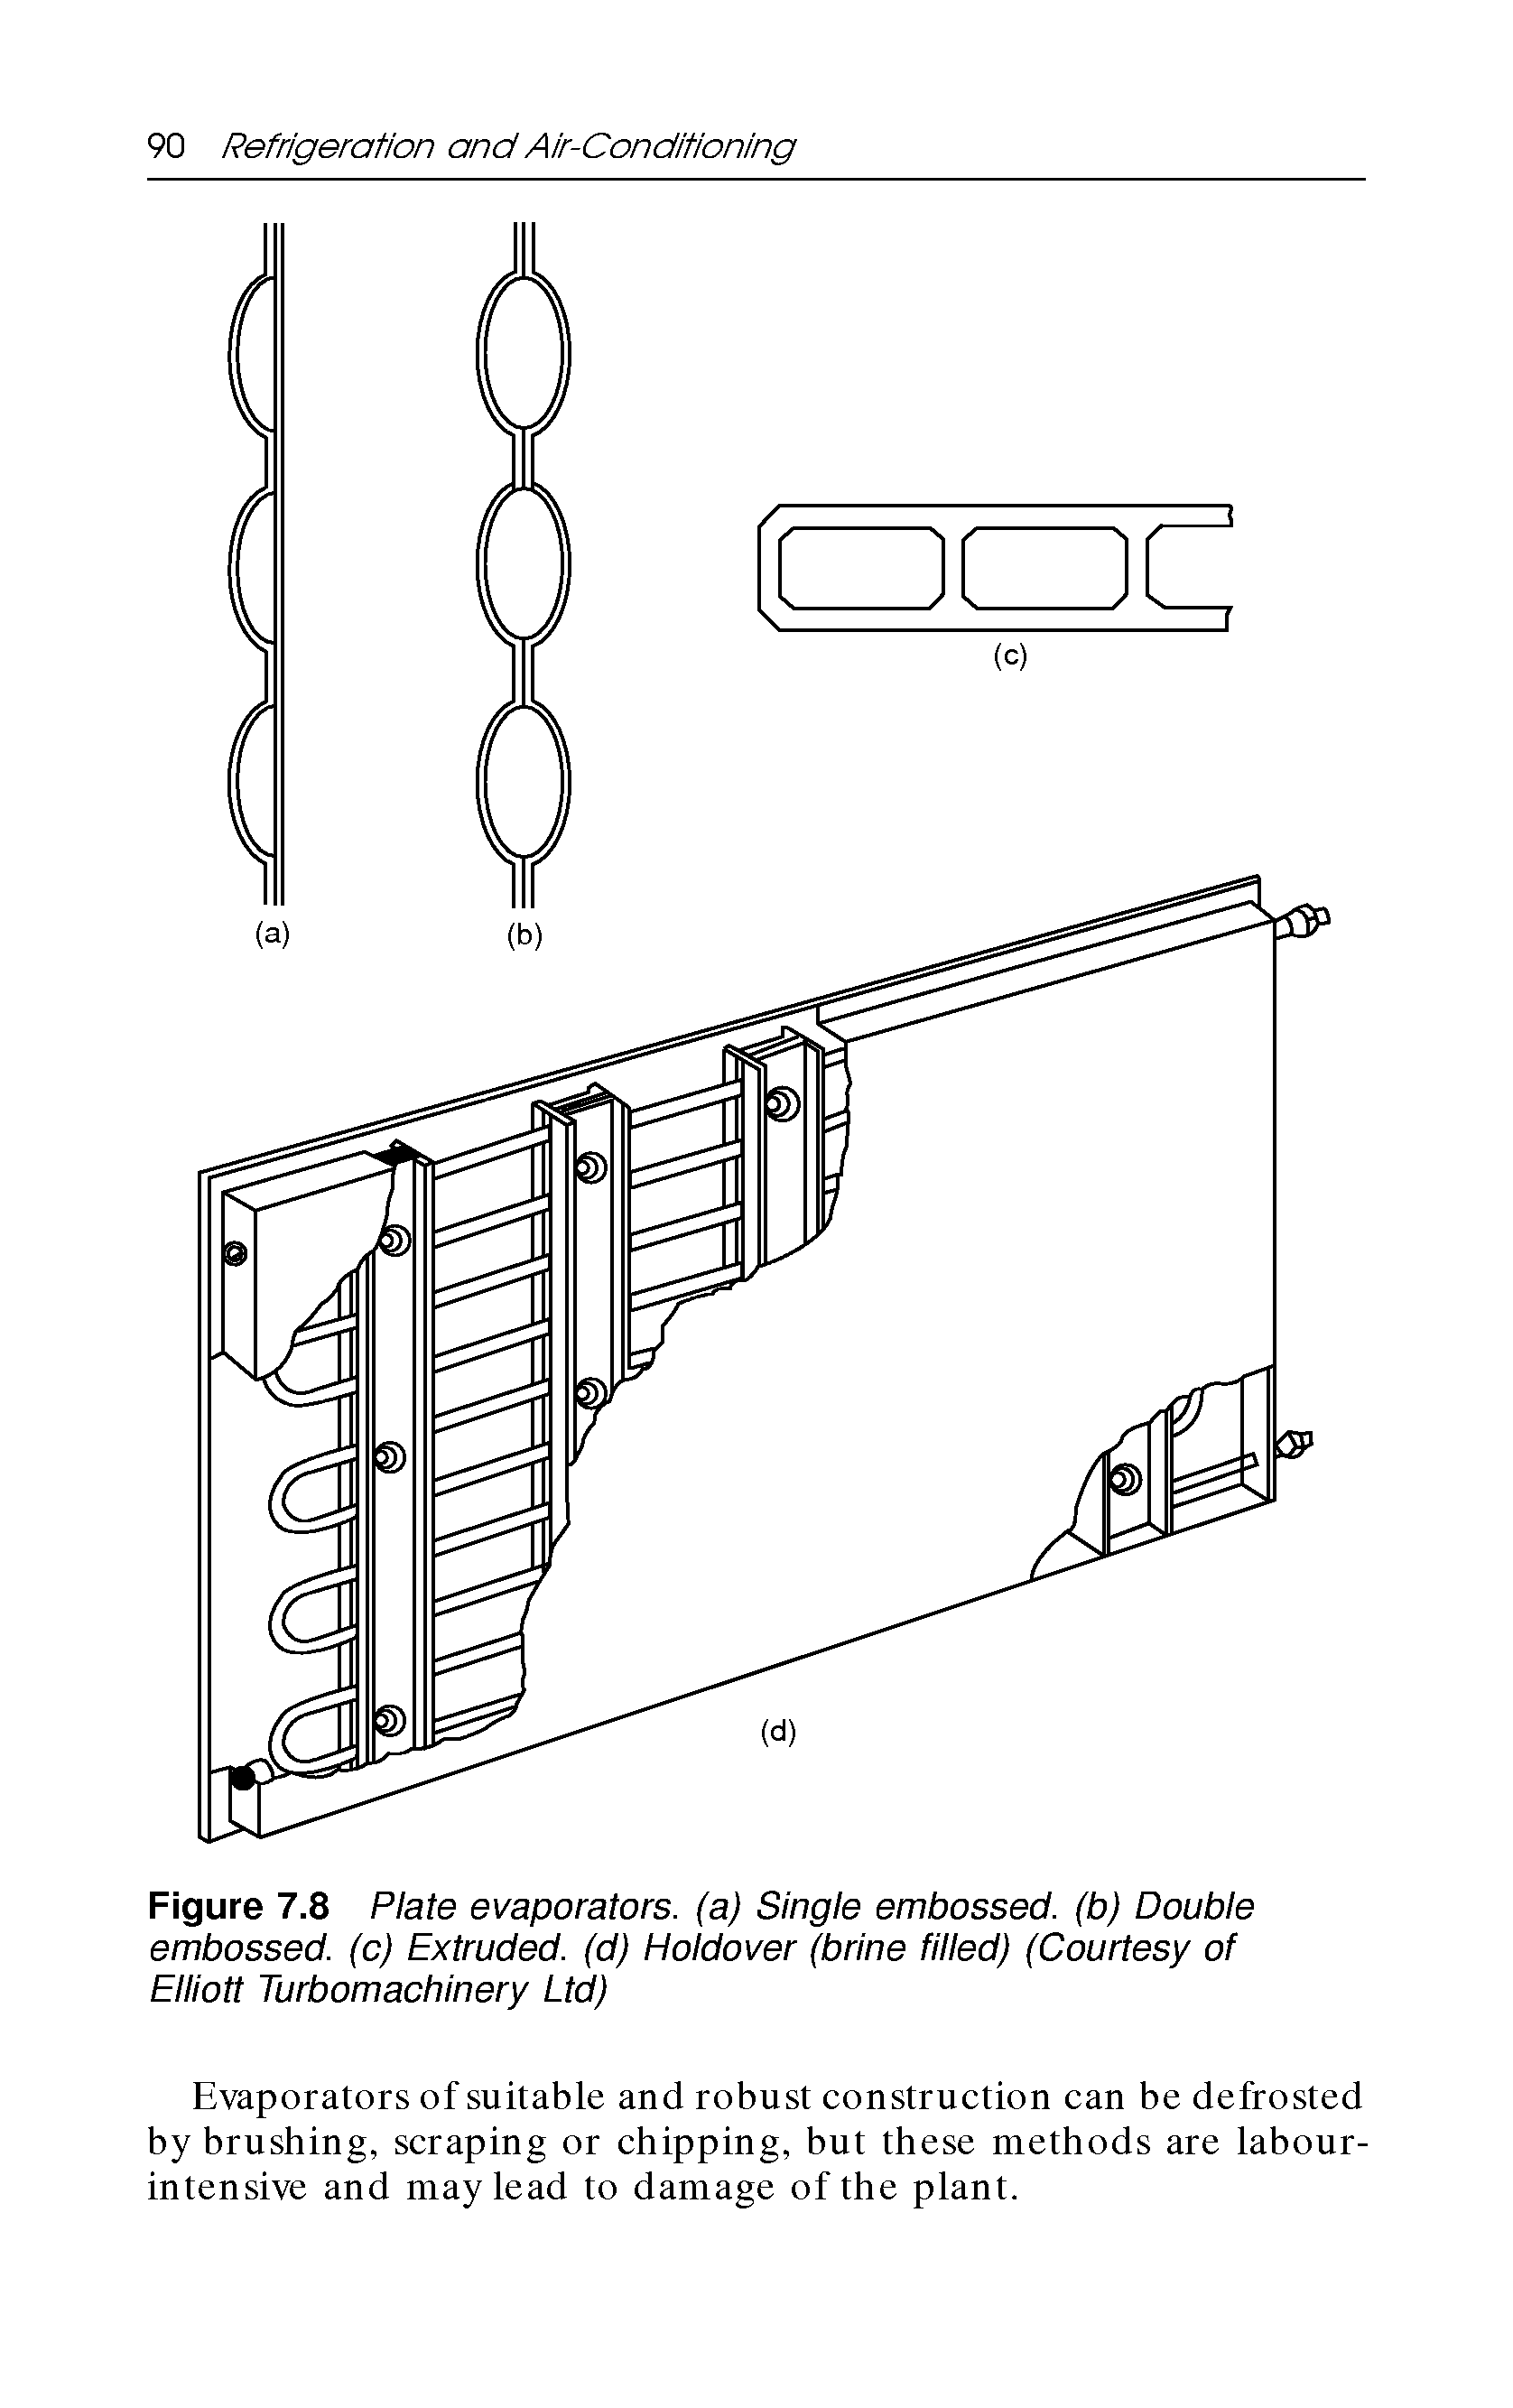 Figure 7.8 Plate evaporators, (a) Single embossed, (b) Double embossed, (c) Extruded, (d) Holdover (brine filled) (Courtesy of Elliott Turbomachinery Ltd)...